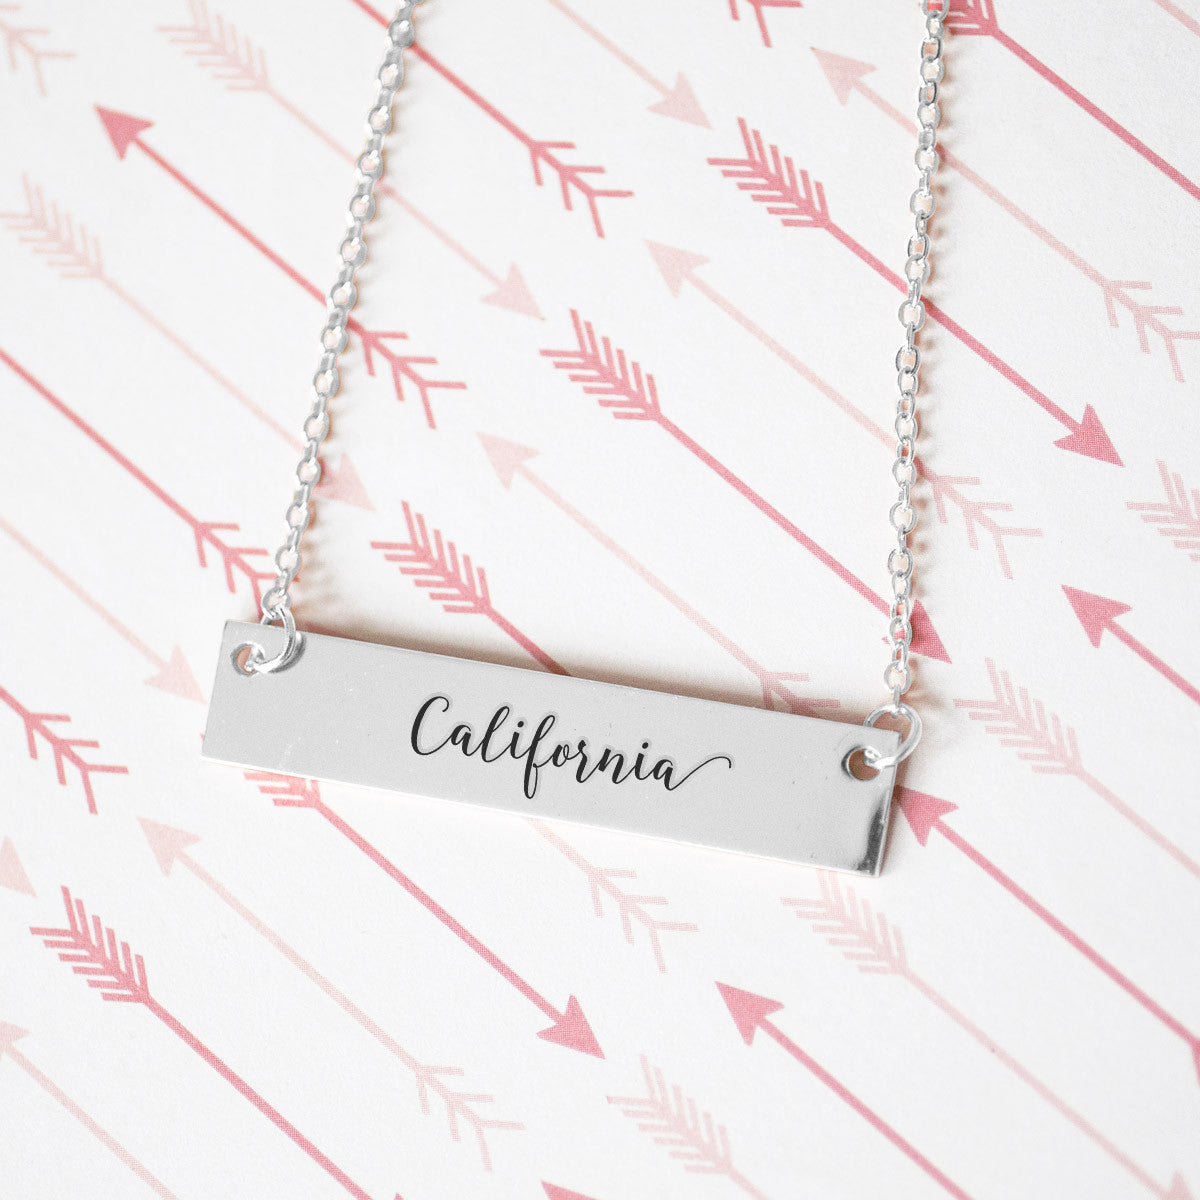 California Gold / Silver Bar Necklace - pipercleo.com